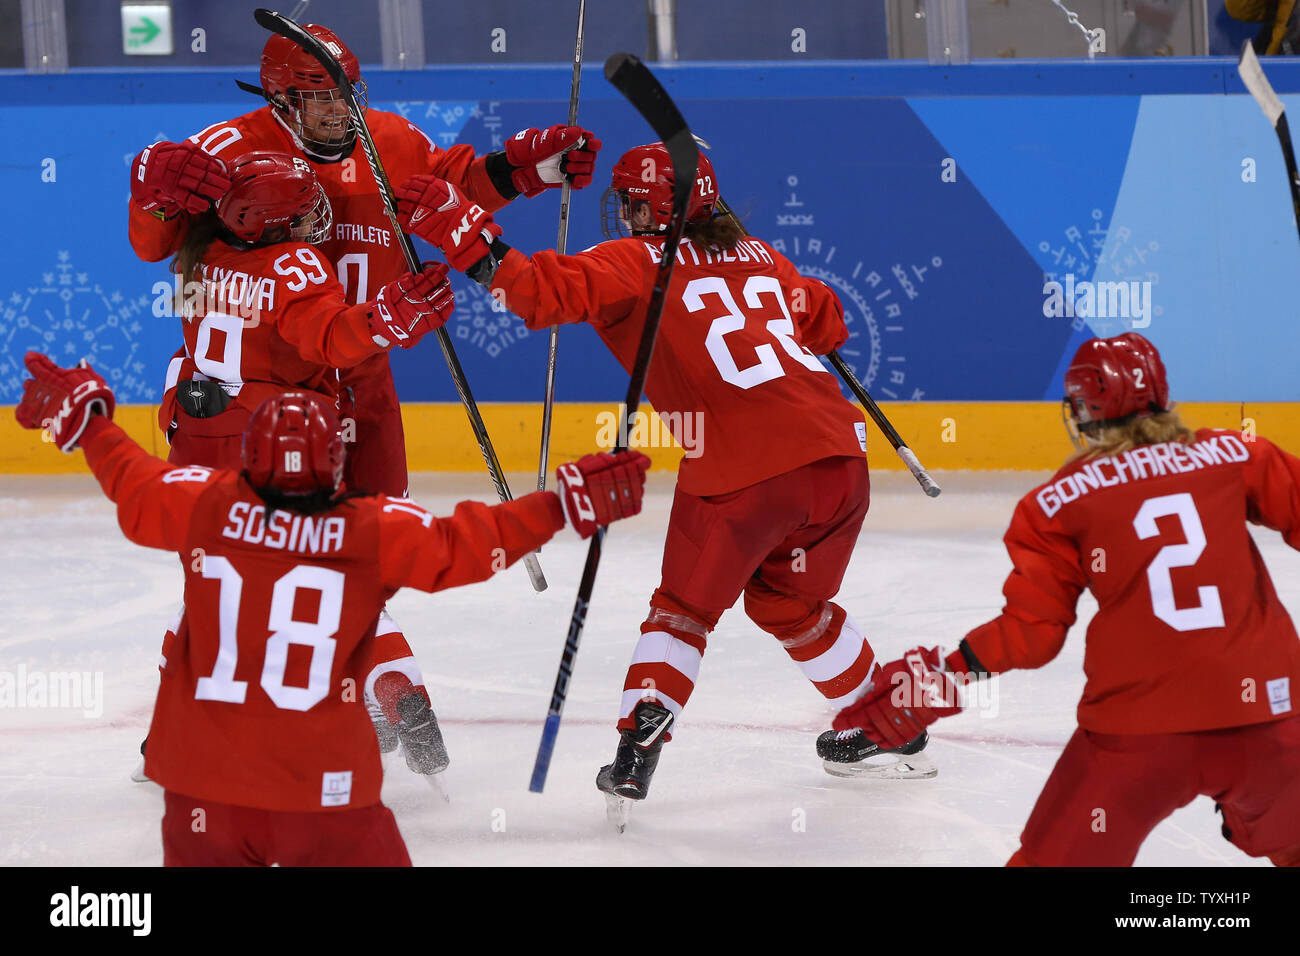 Russian players Olga Sosina (#18), Yelena Dergachyova (#59), Maria Batalova (#22) and Angelina Goncharenko (#2) celebrate with Lyudmila Belyakova (top) after she scored a goal against Finland during the women's ice hockey bronze medal game at the Kwandong Hockey Centre in Gangneung, South Korea, during the 2018 Pyeongchang Winter Olympics on February 21, 2018. Finland beat Russia 3-2 to win the bronze medal. Photo by Andrew Wong/UPI Stock Photo